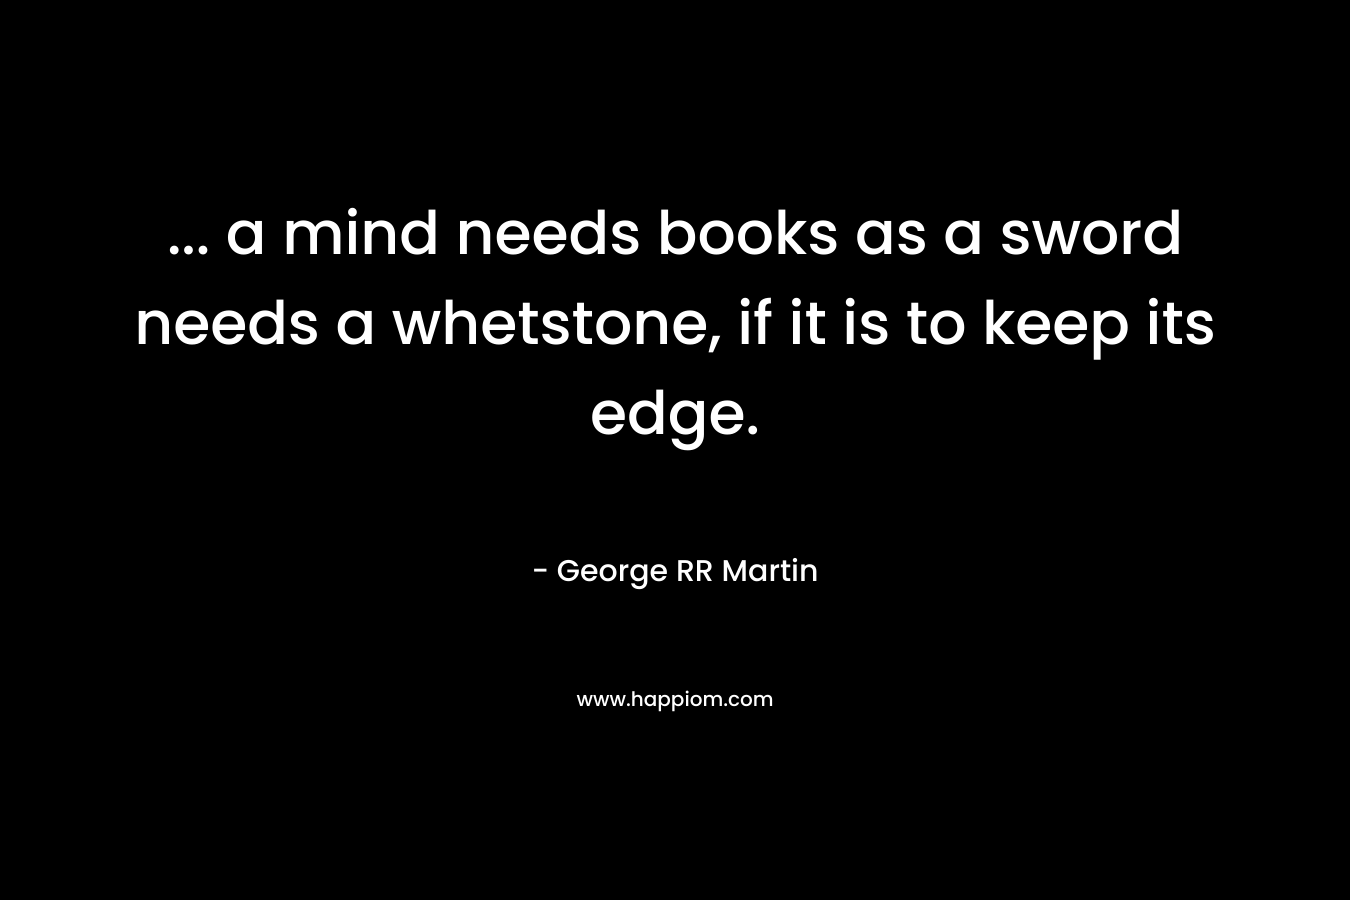 ... a mind needs books as a sword needs a whetstone, if it is to keep its edge.